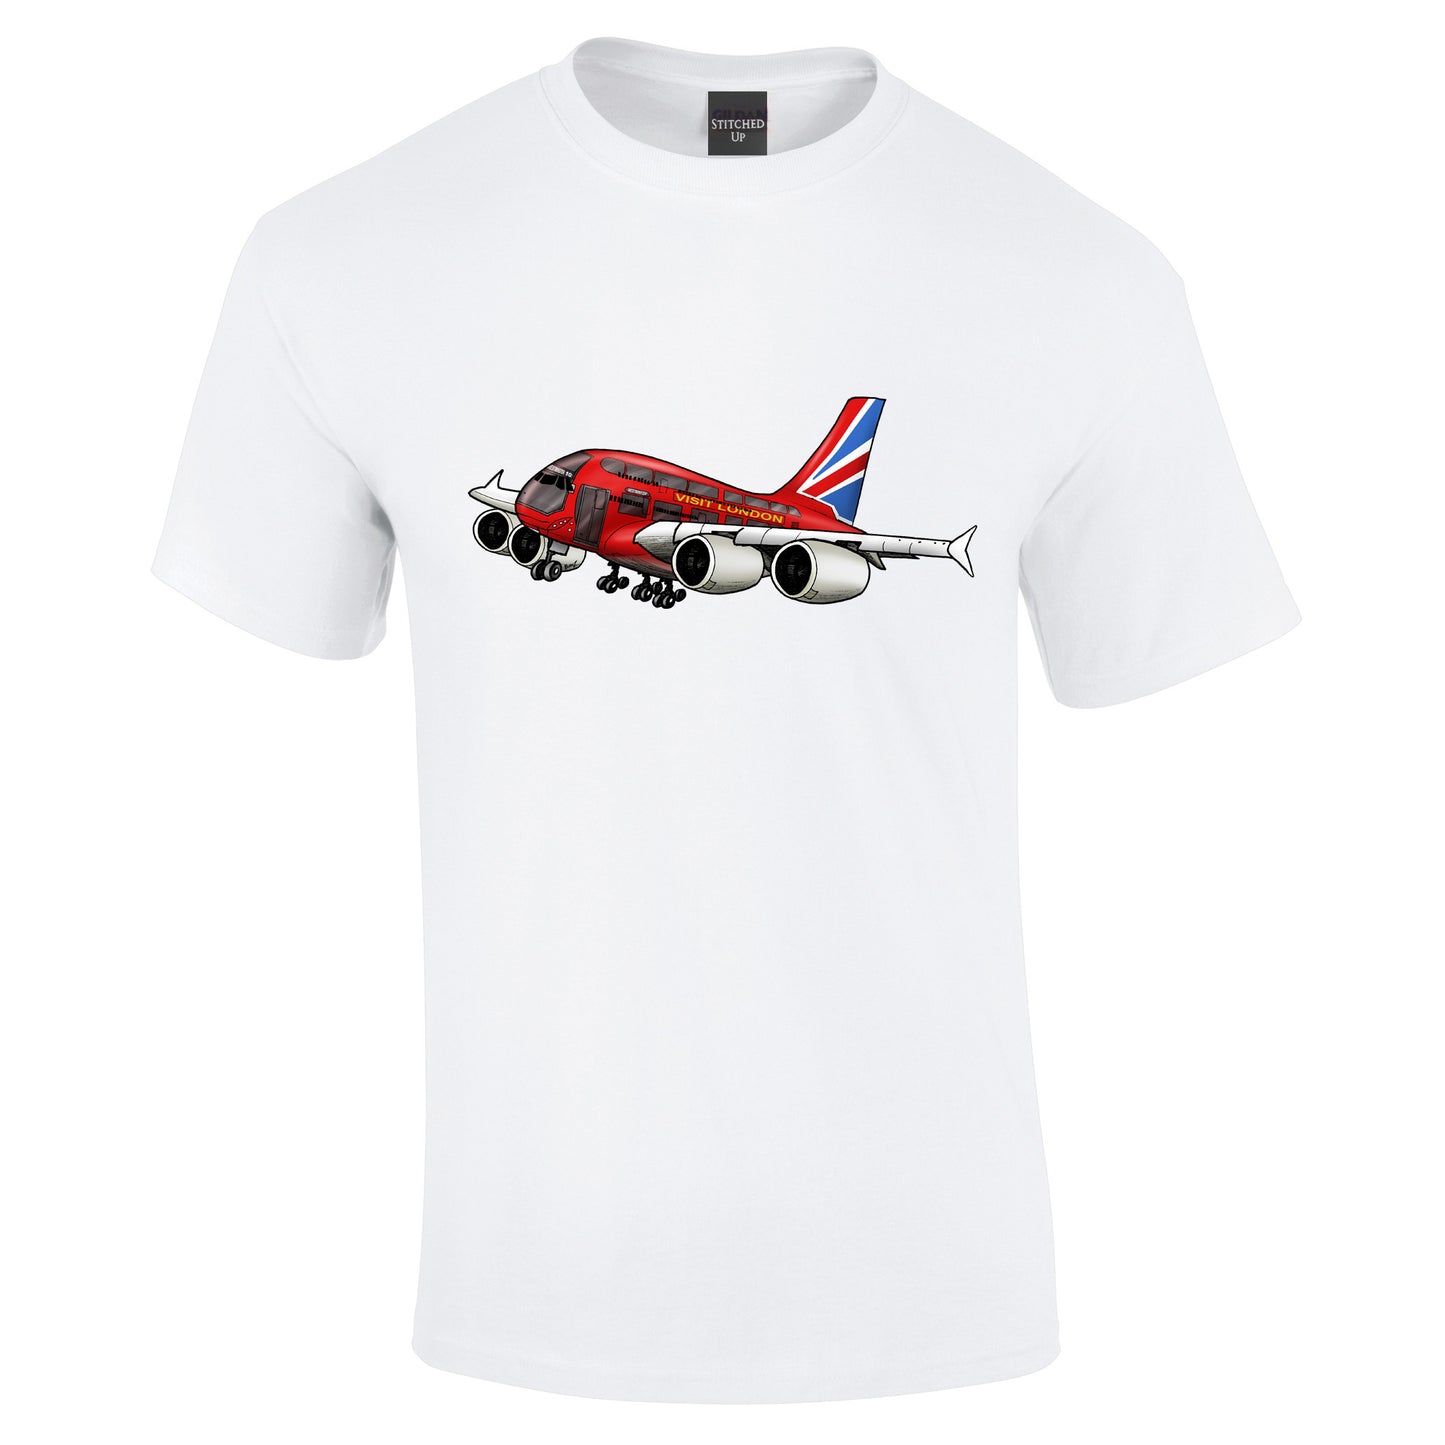 The London AirBus A380 T-Shirt